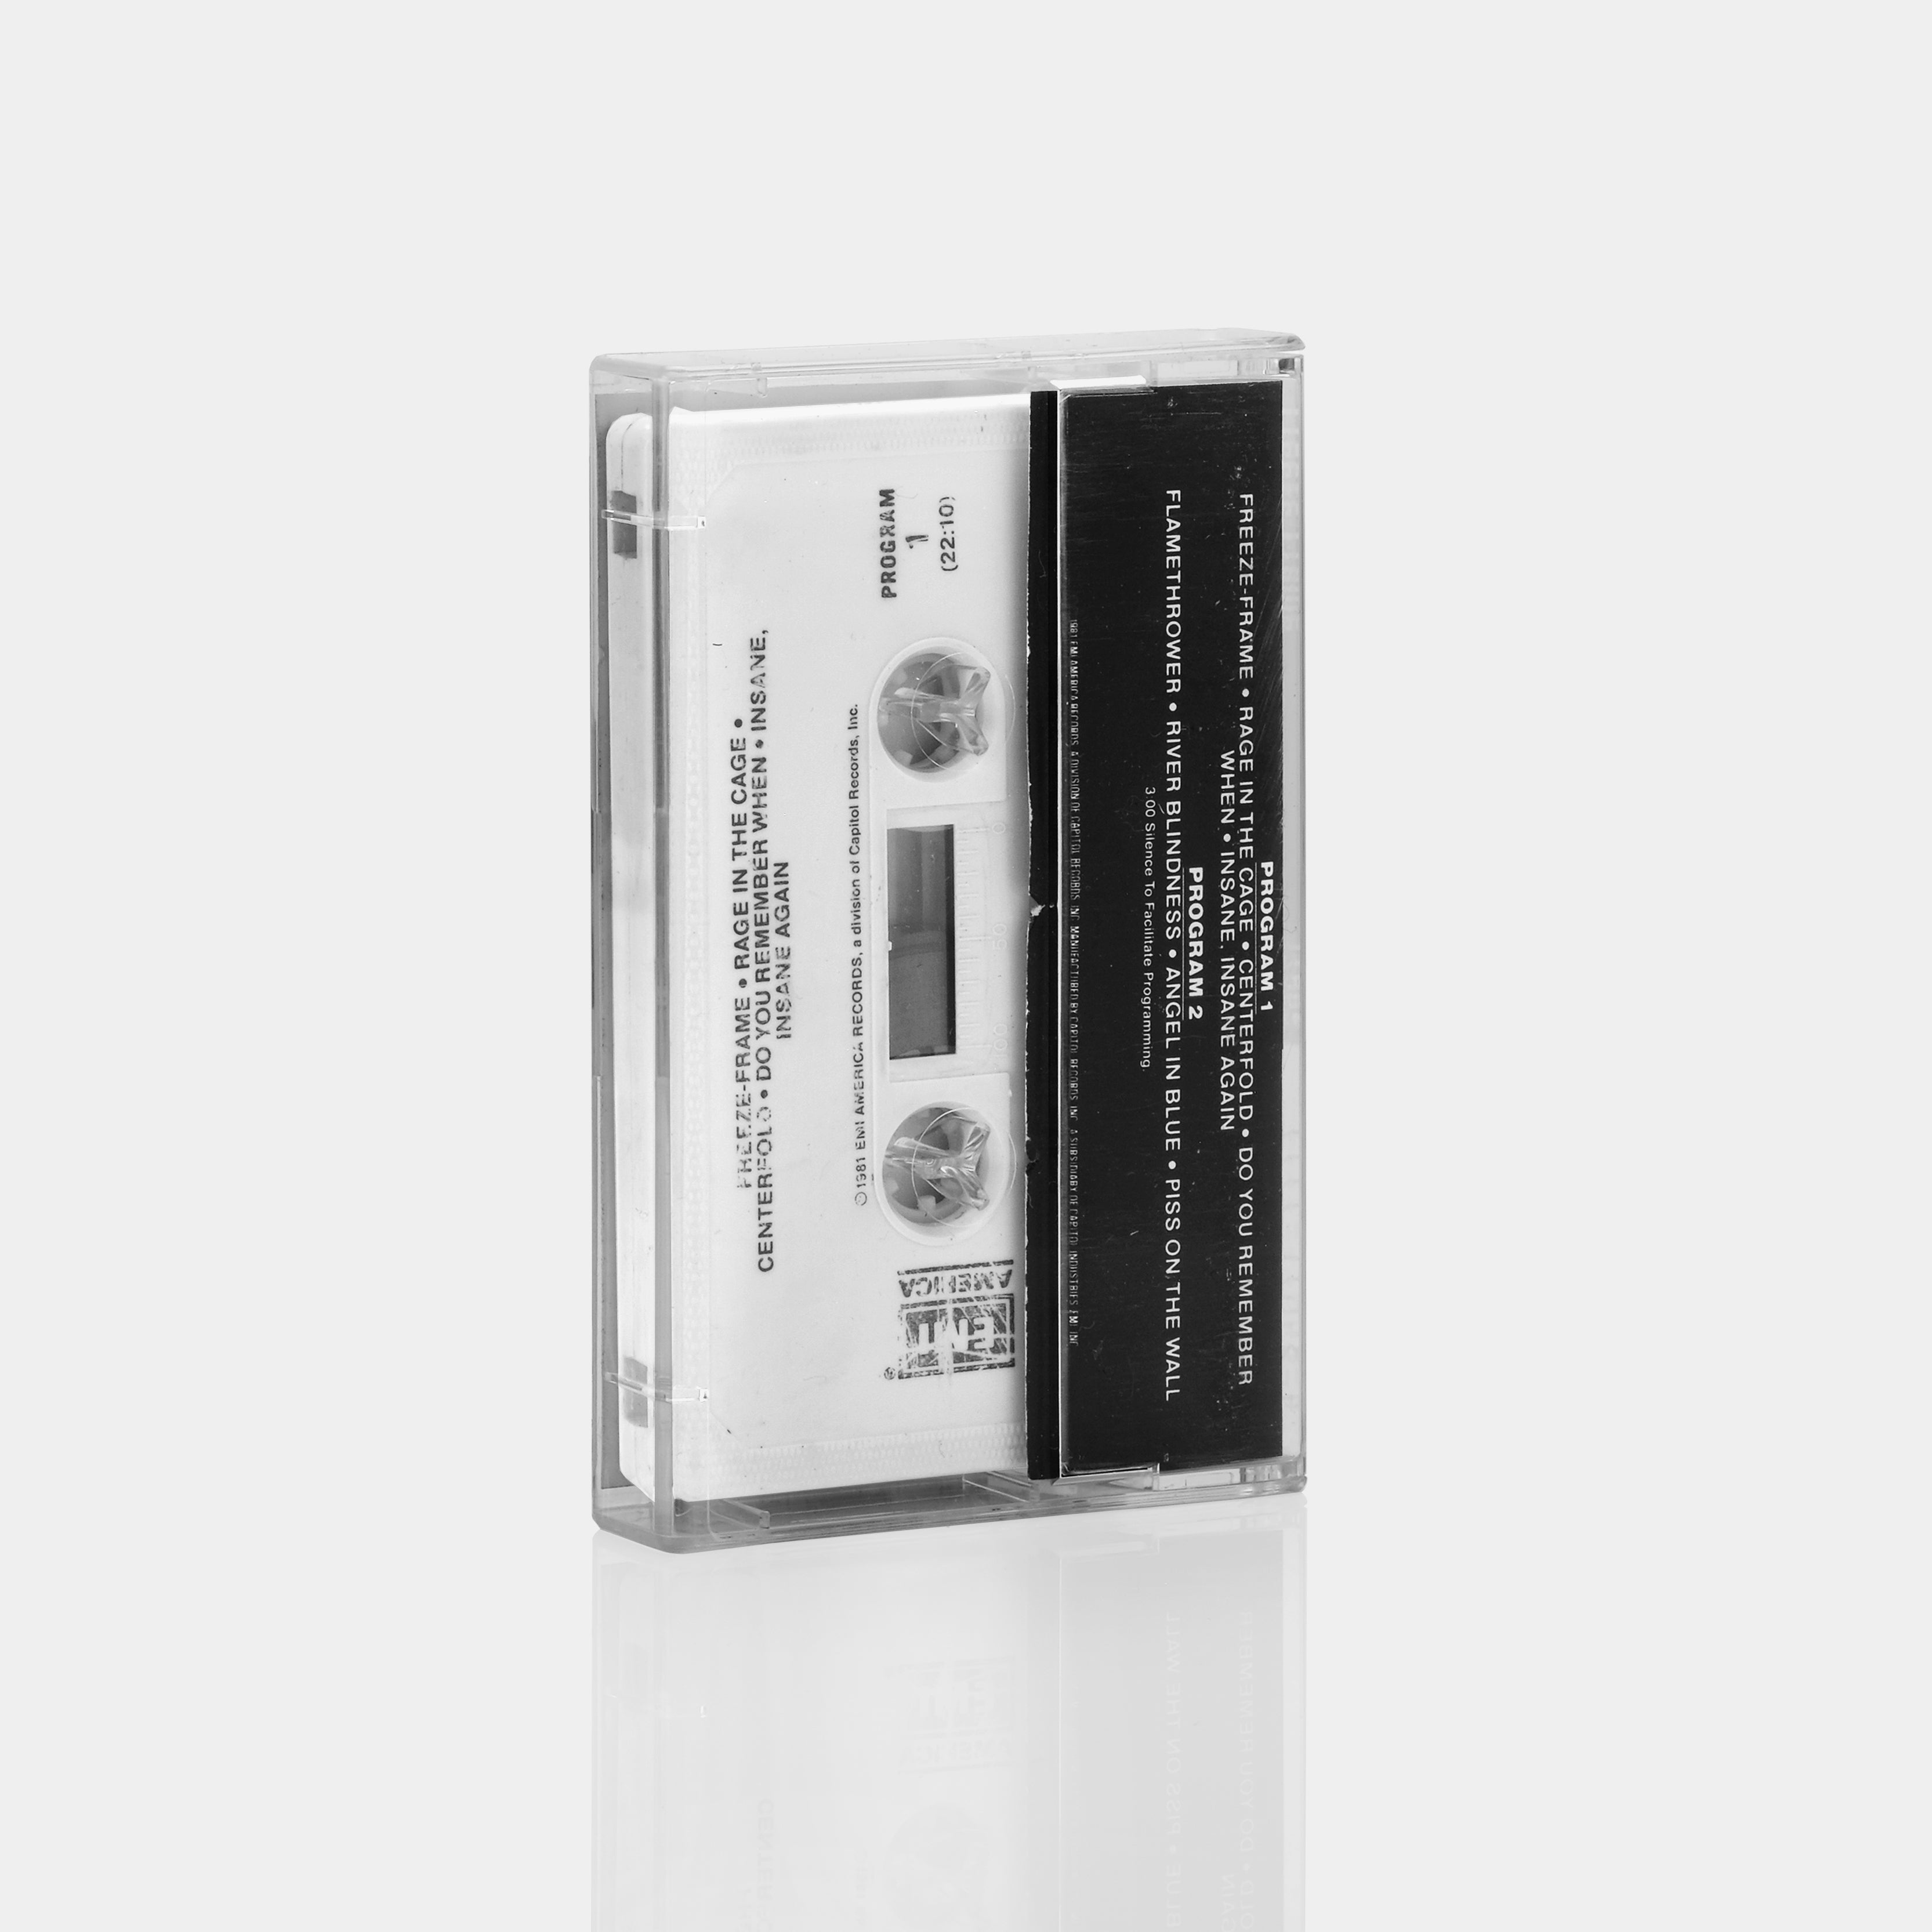 The J. Geils Band - Freeze-Frame Cassette Tape